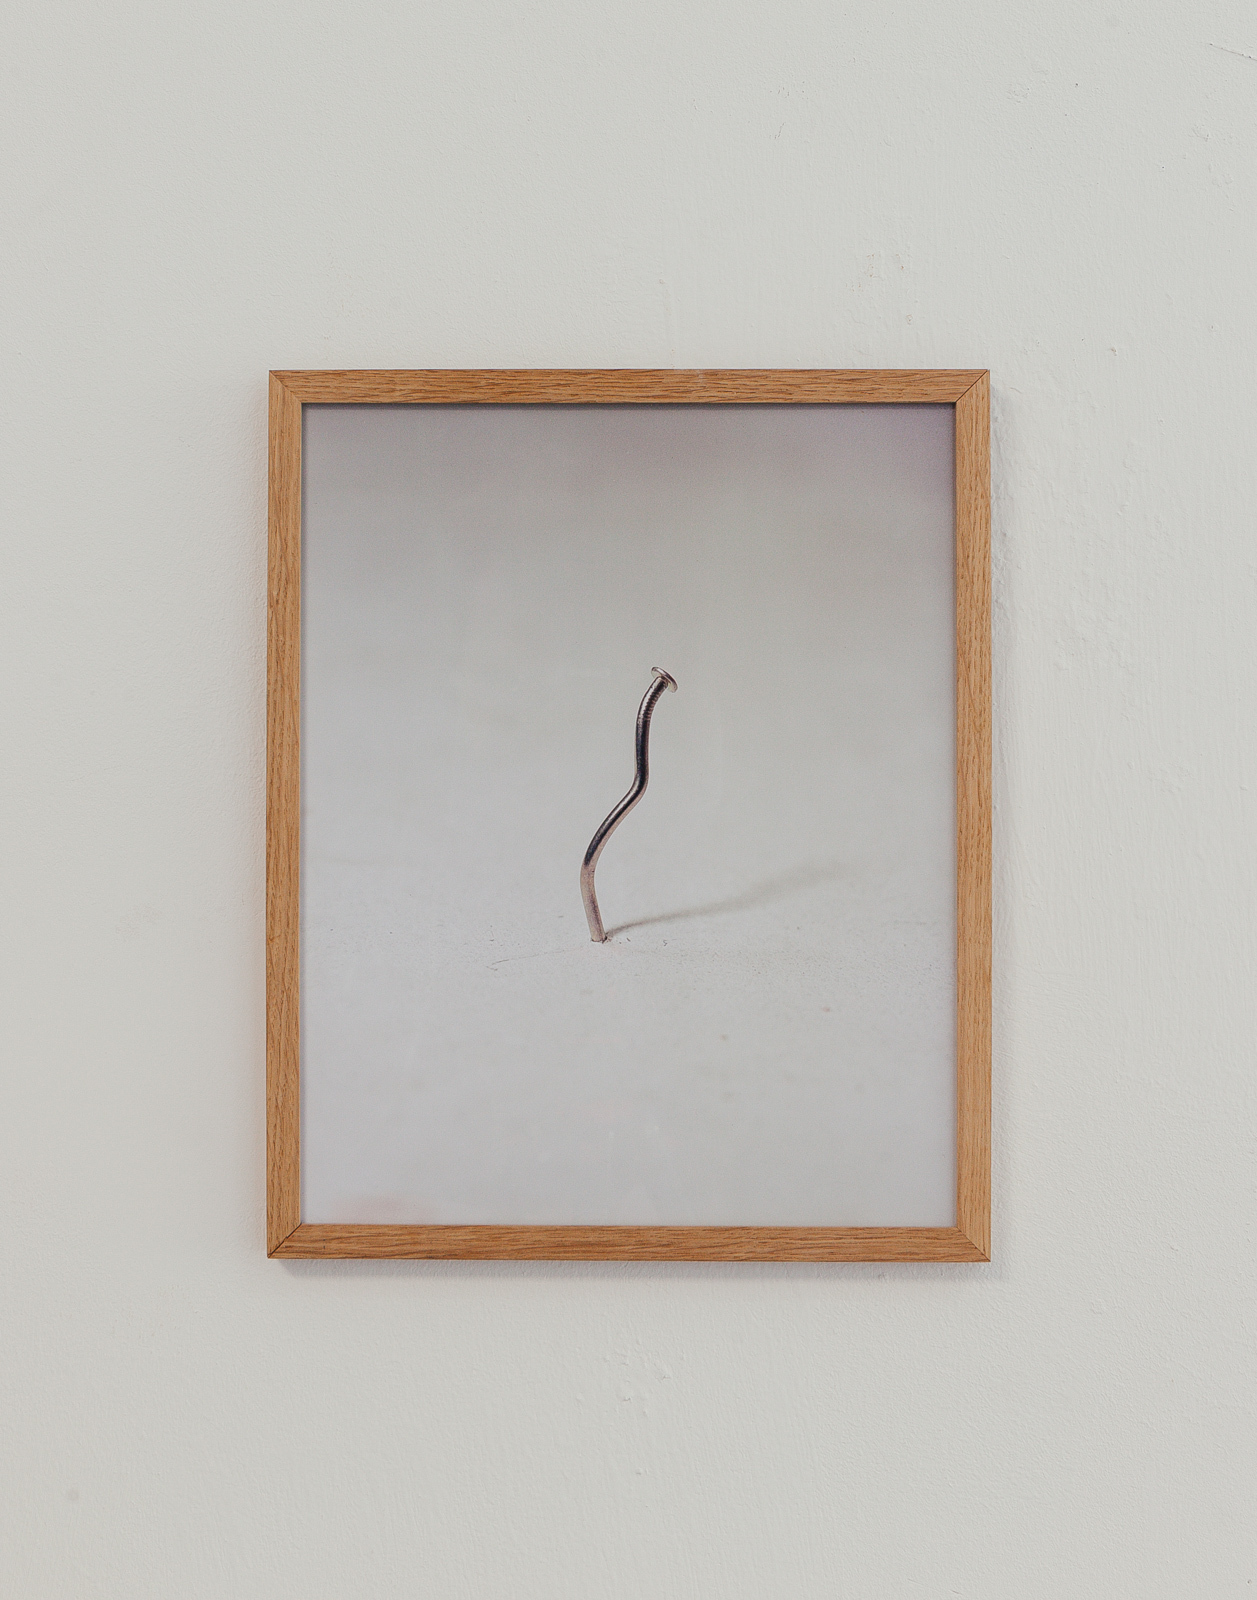 Laura Jatkowski, Strike, 2020, Injekt Print, 24x30cm